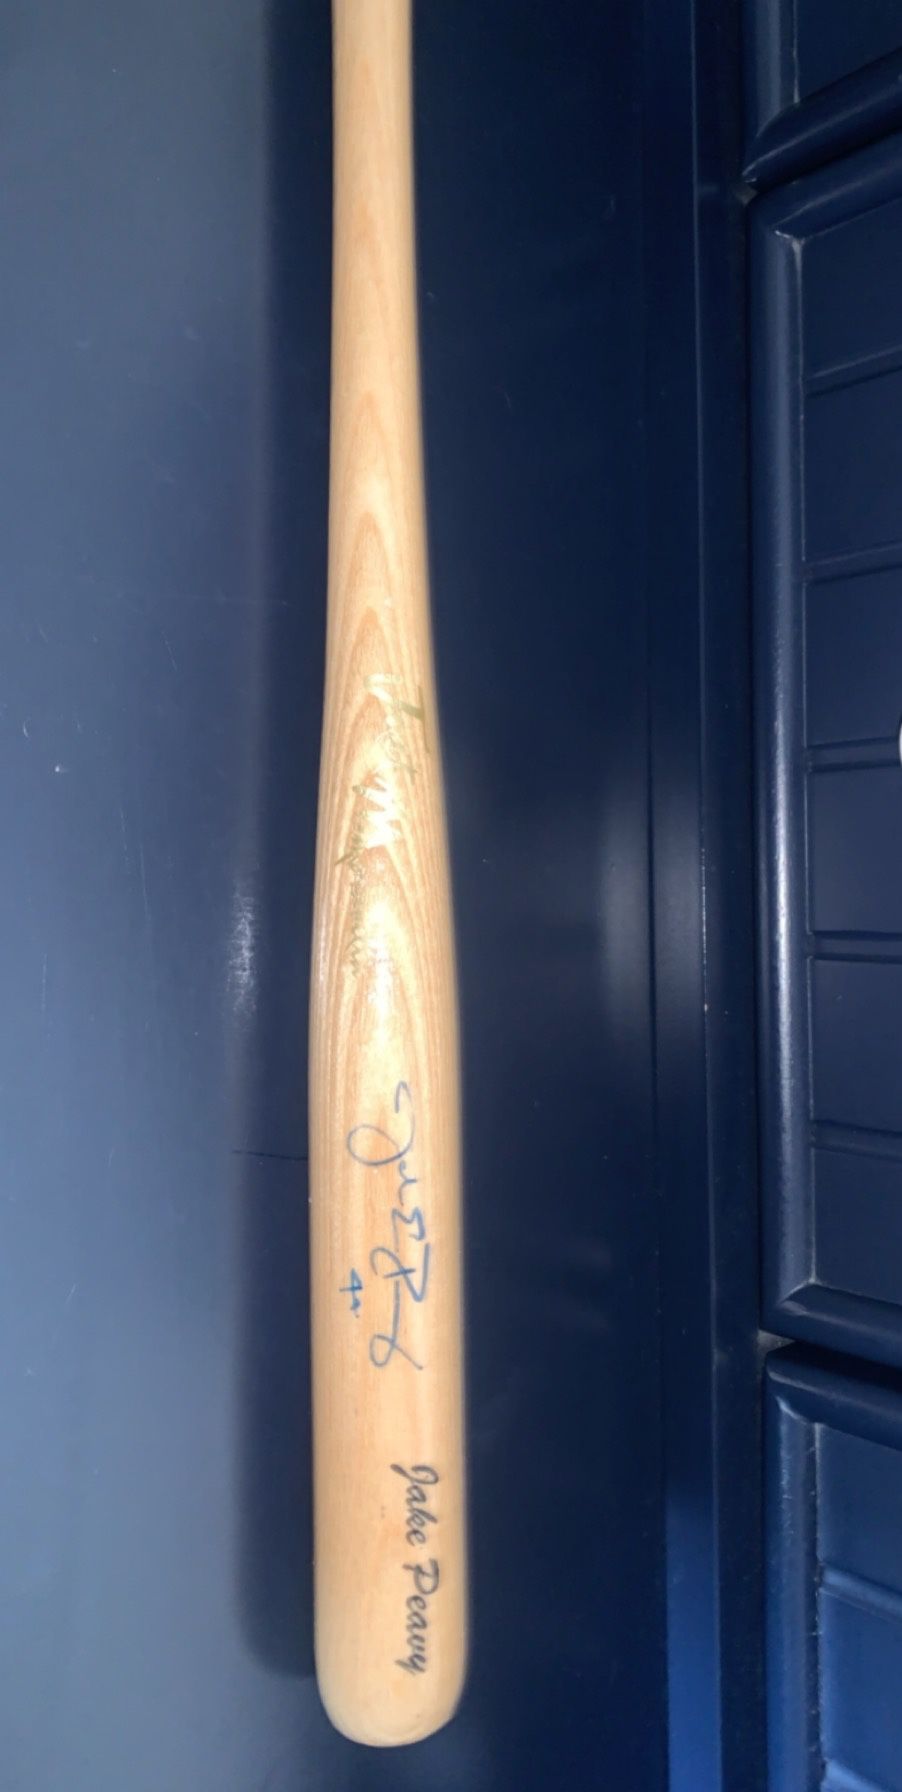 Autographed mini baseball bat Jake Peavy